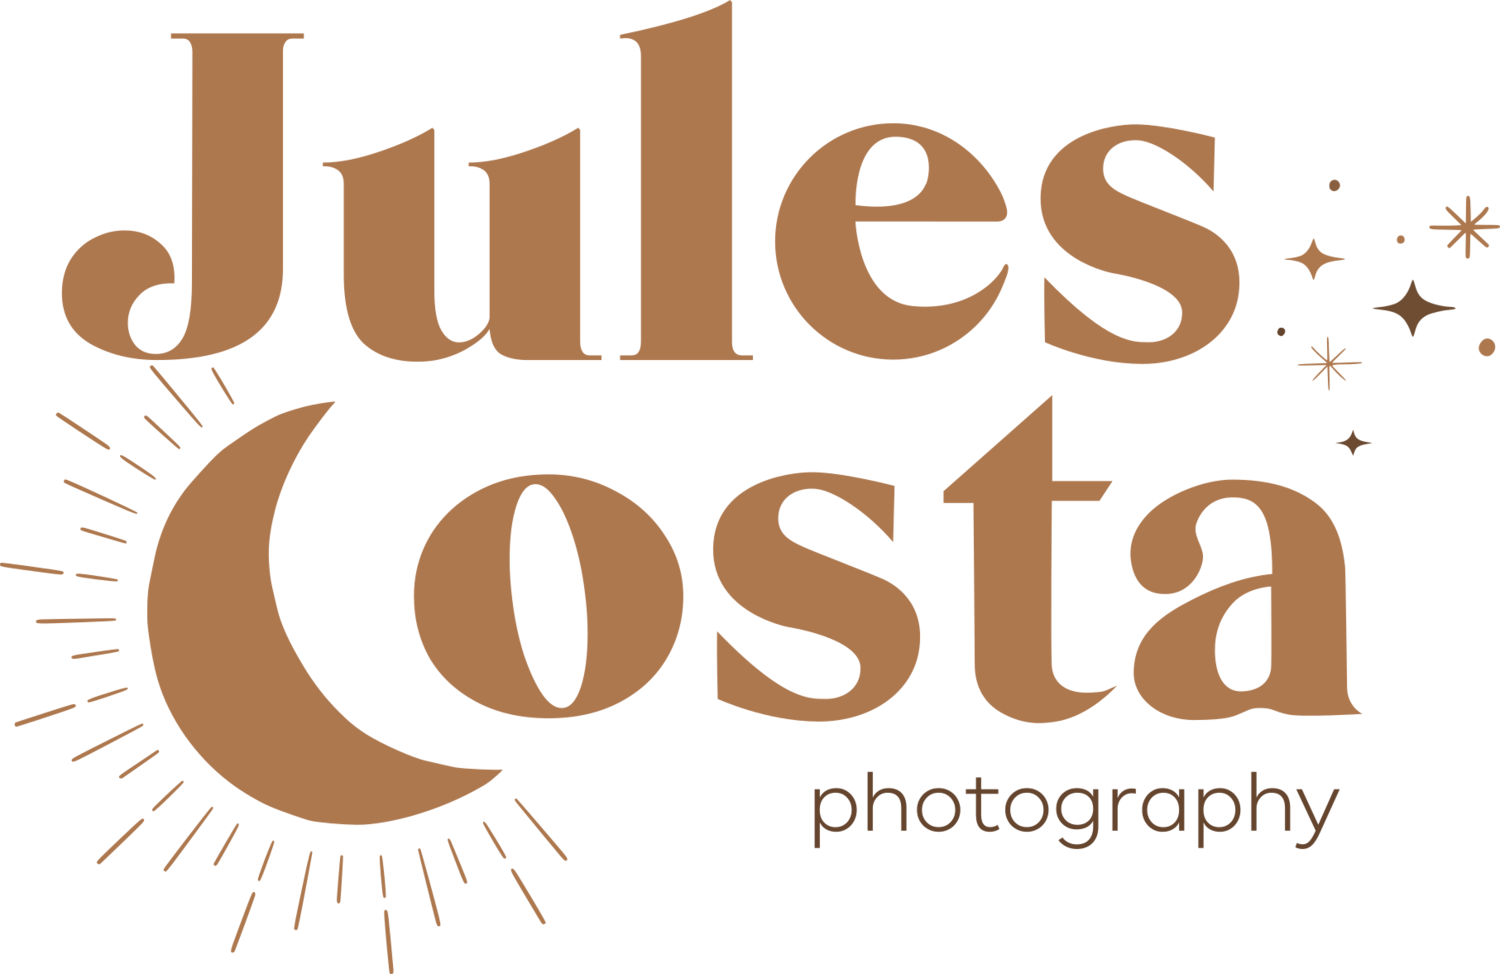 Jules Costa